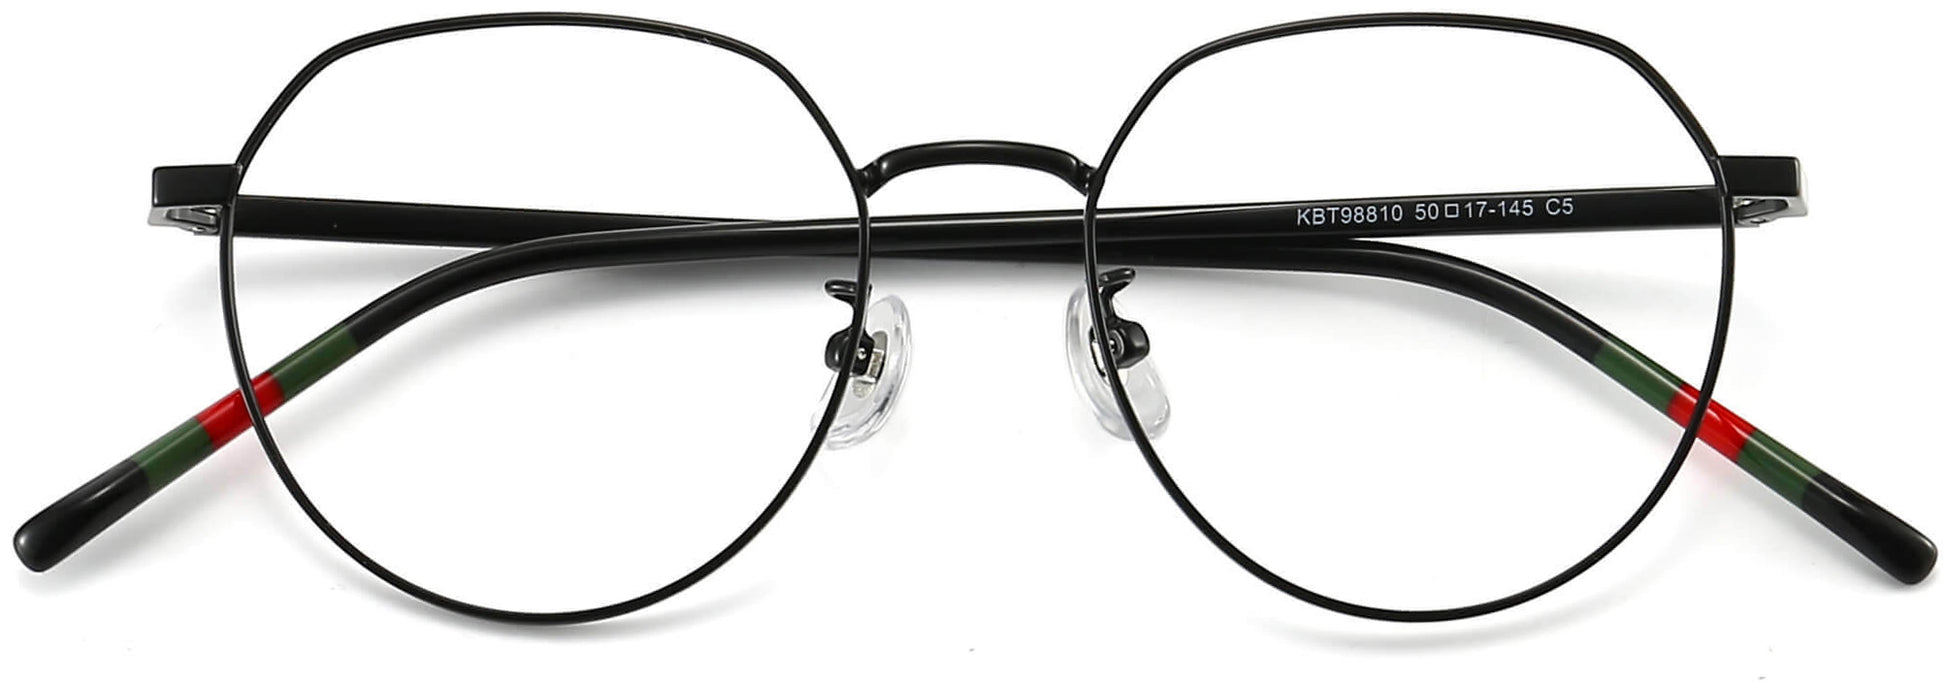 Grady Geometric Black Eyeglasses from ANRRI, closed view